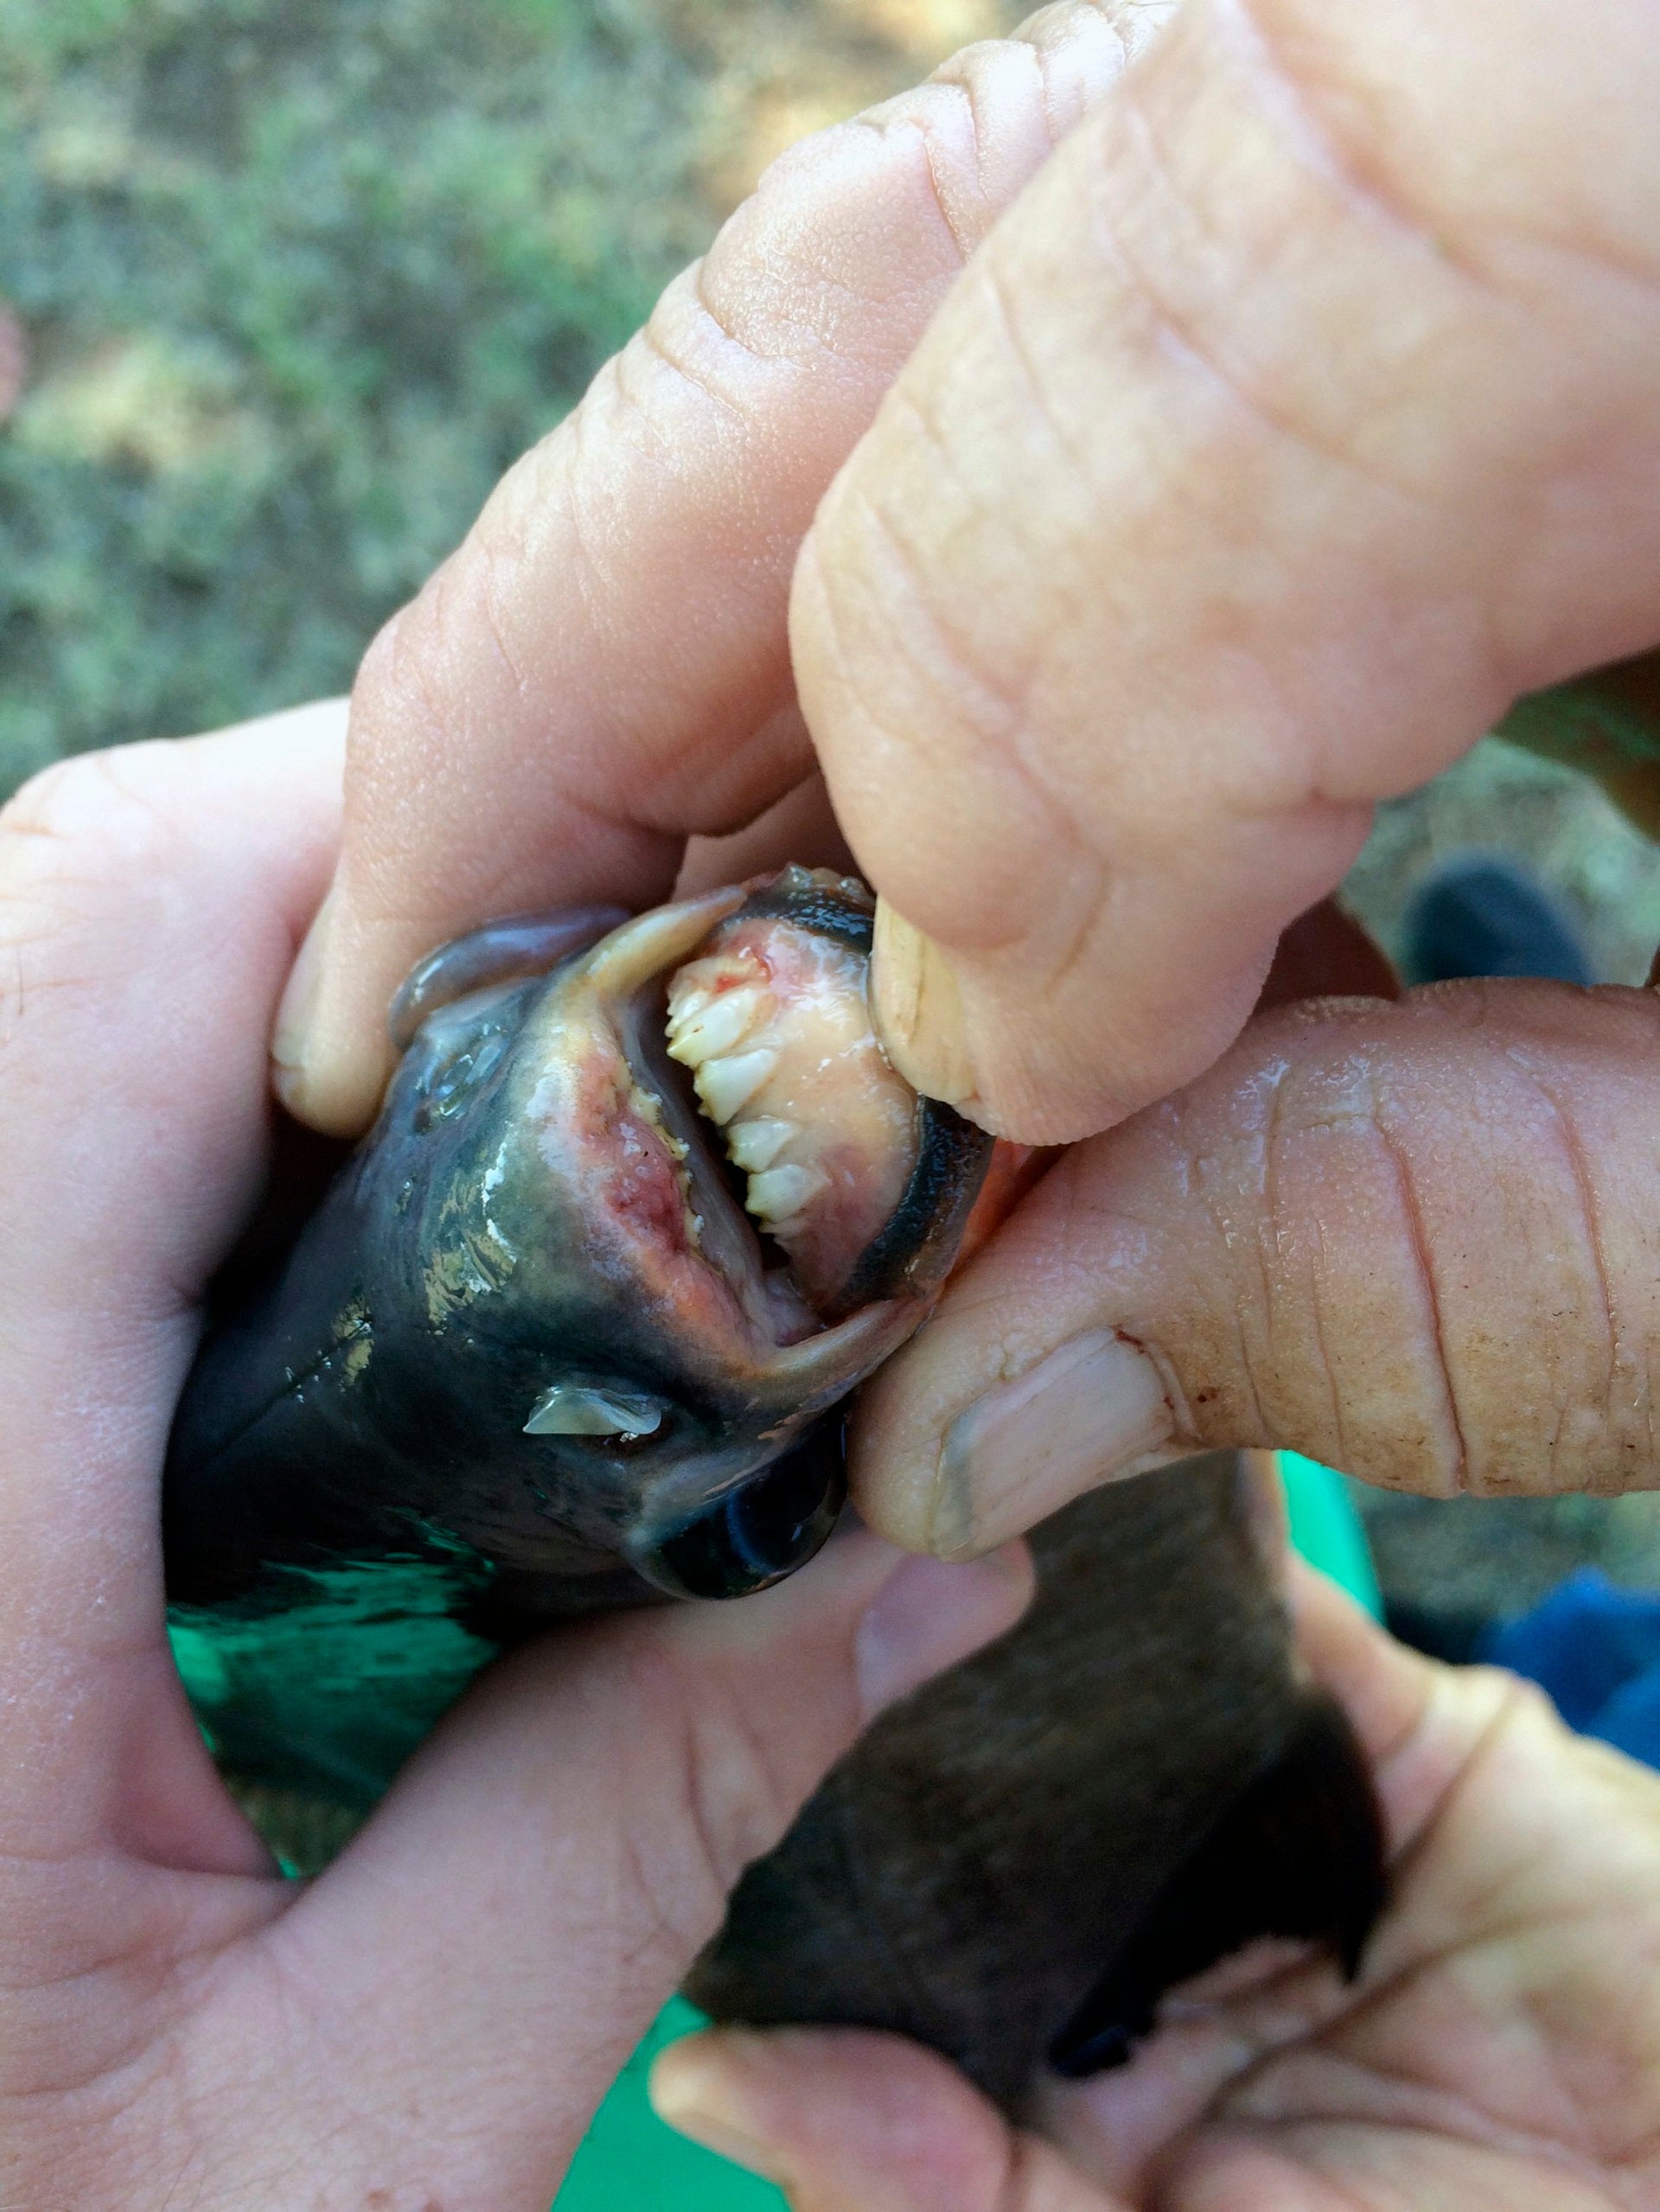 Oklahoma girl catches fish with 'human-like' teeth